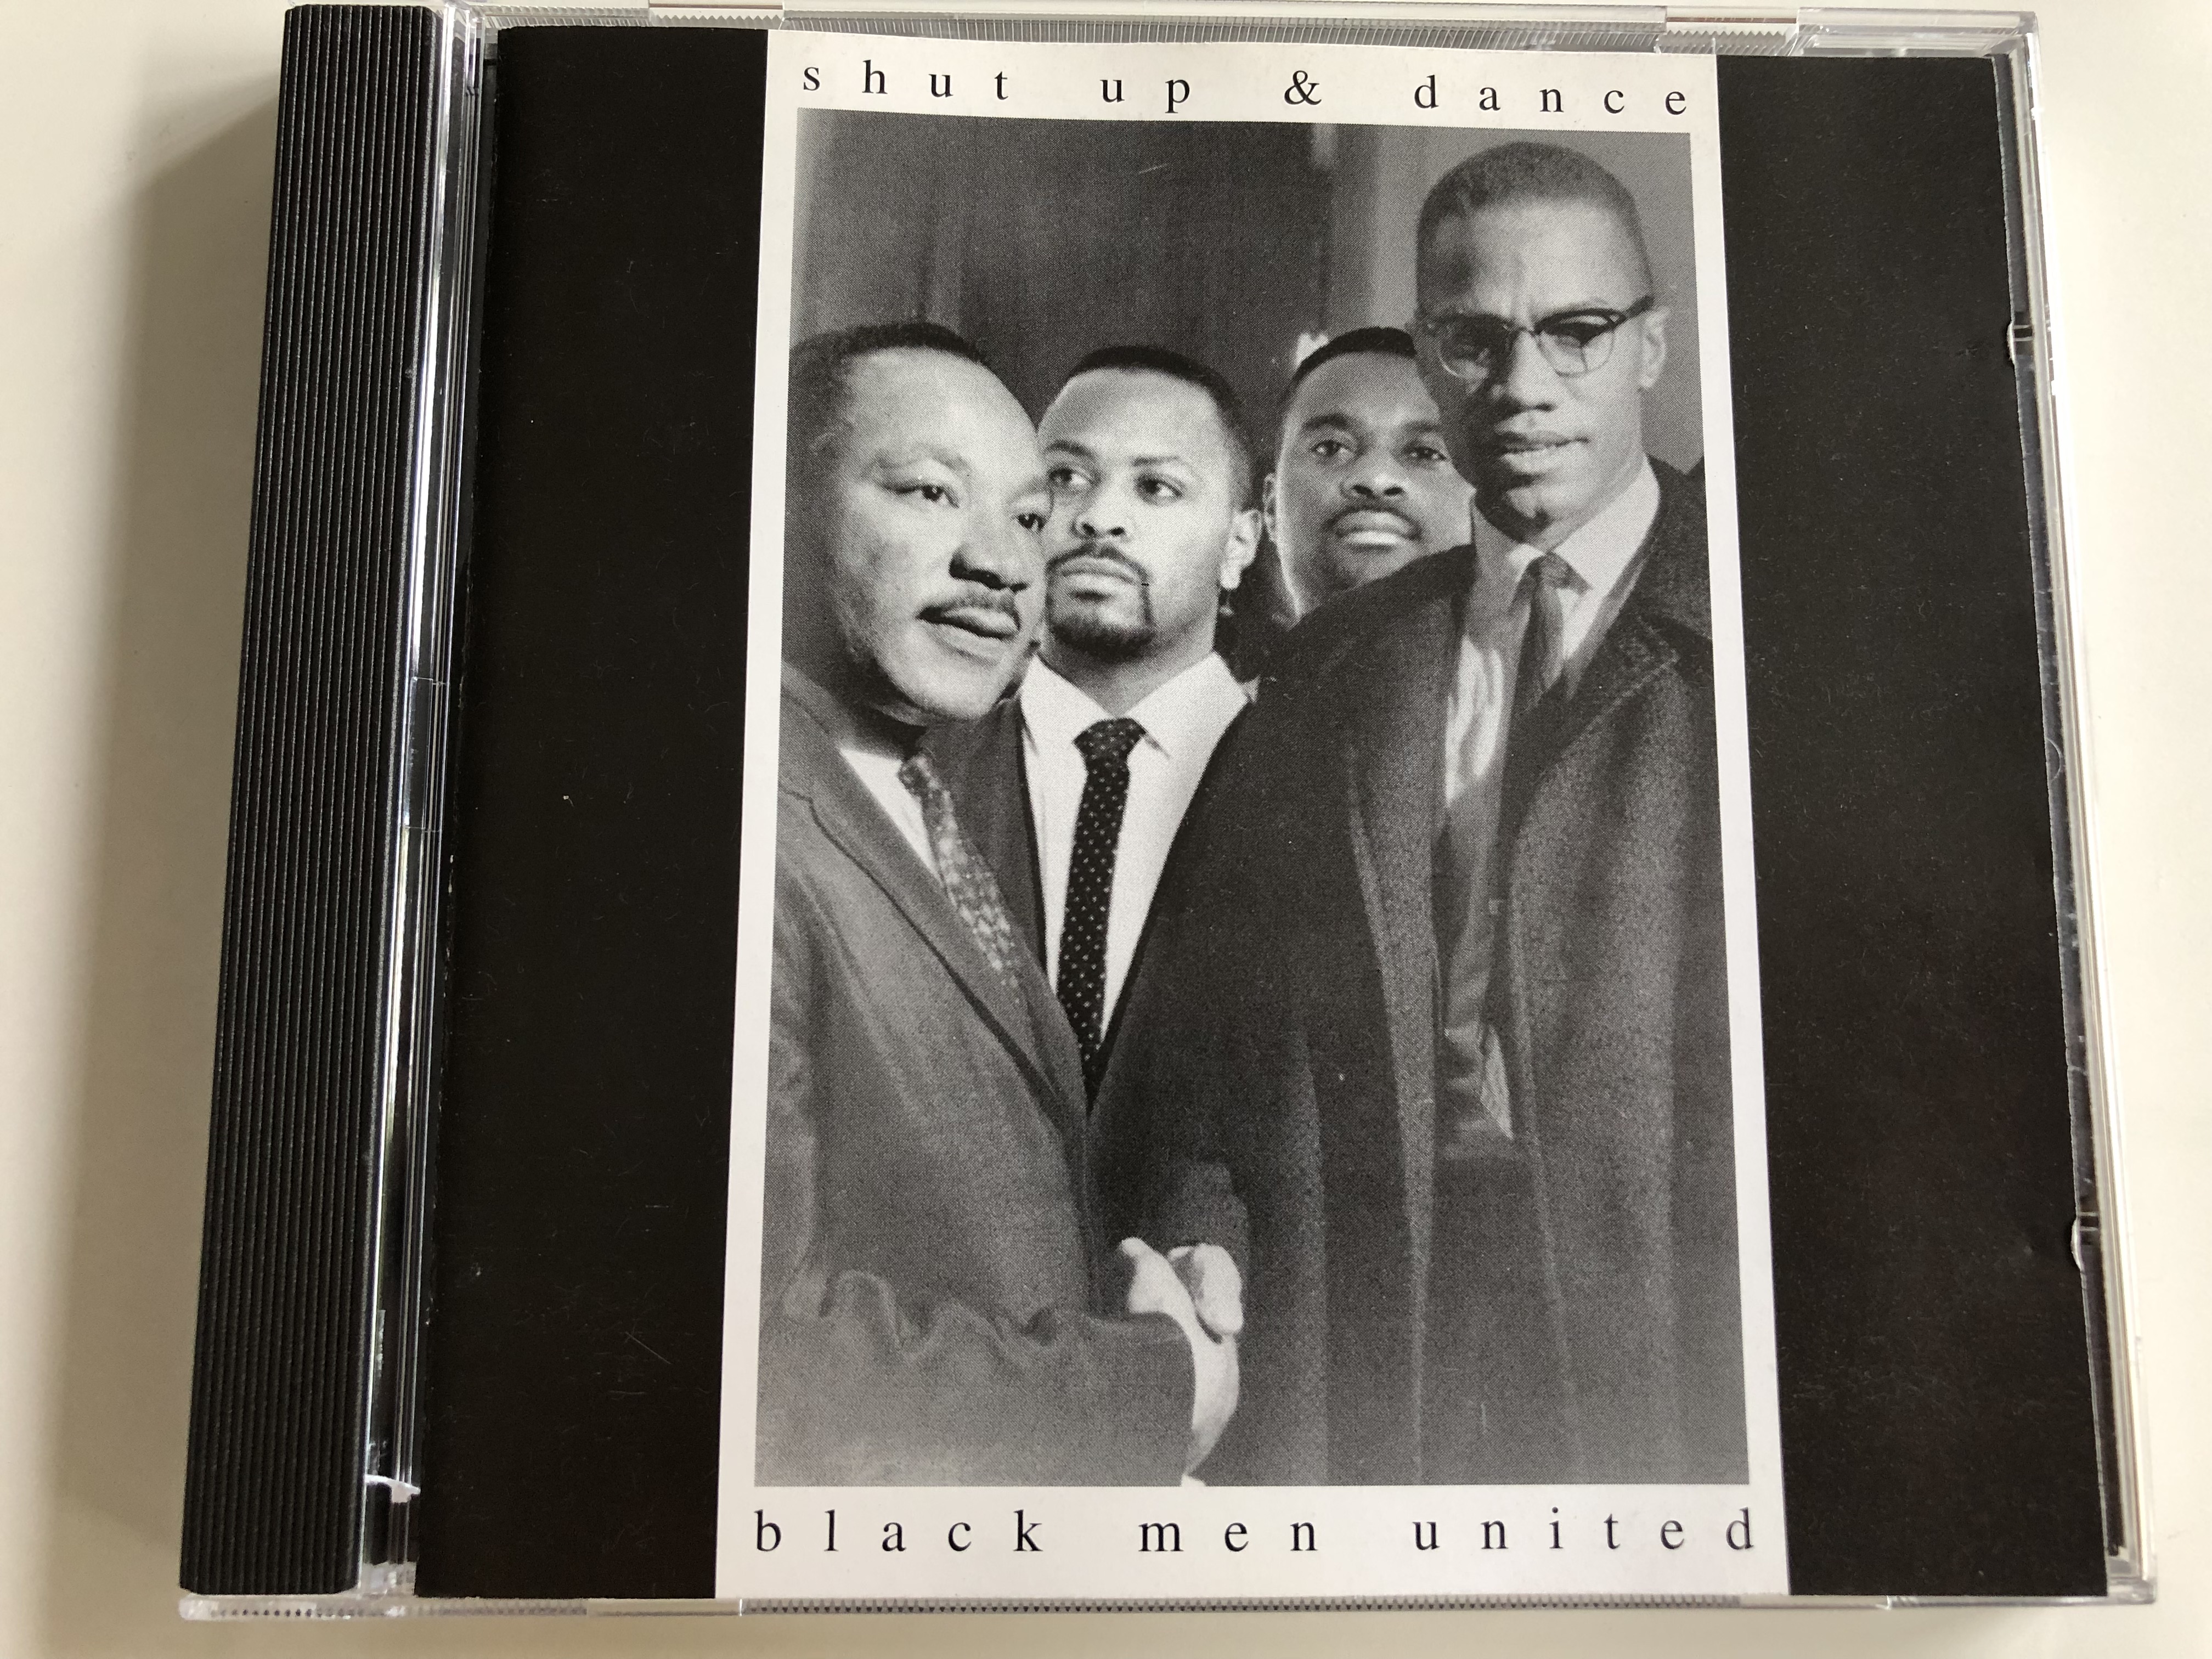 black-men-united-shut-up-and-dance-audio-cd-1995-pulse-8-records-1-.jpg